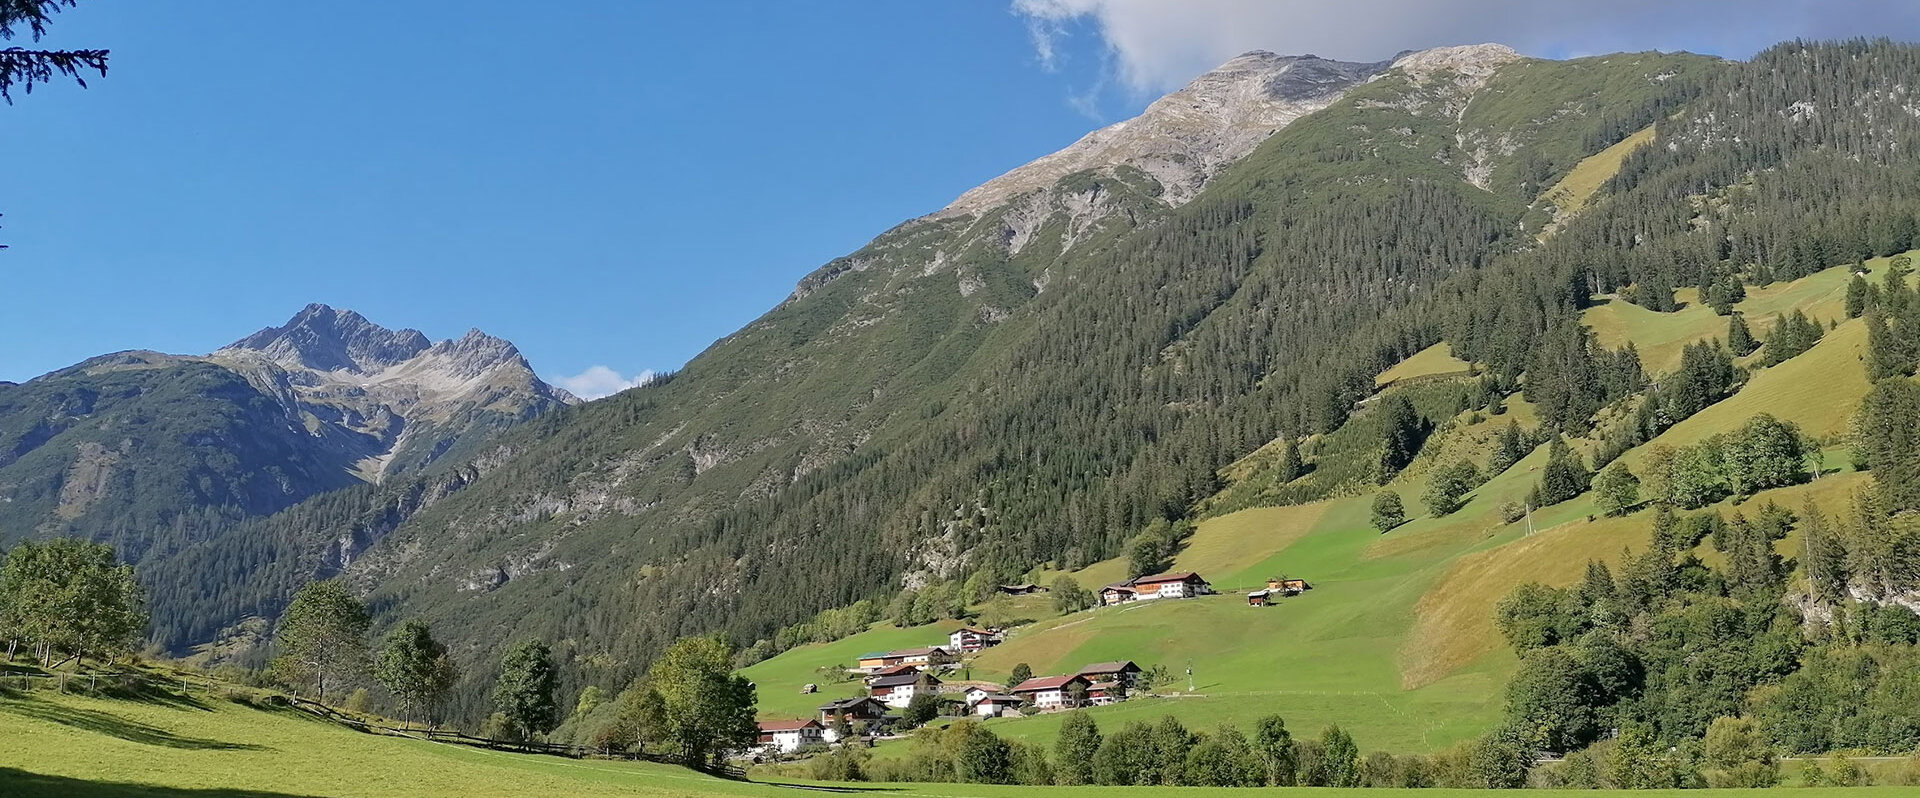 Lärchenhof Tirol - Impressionen